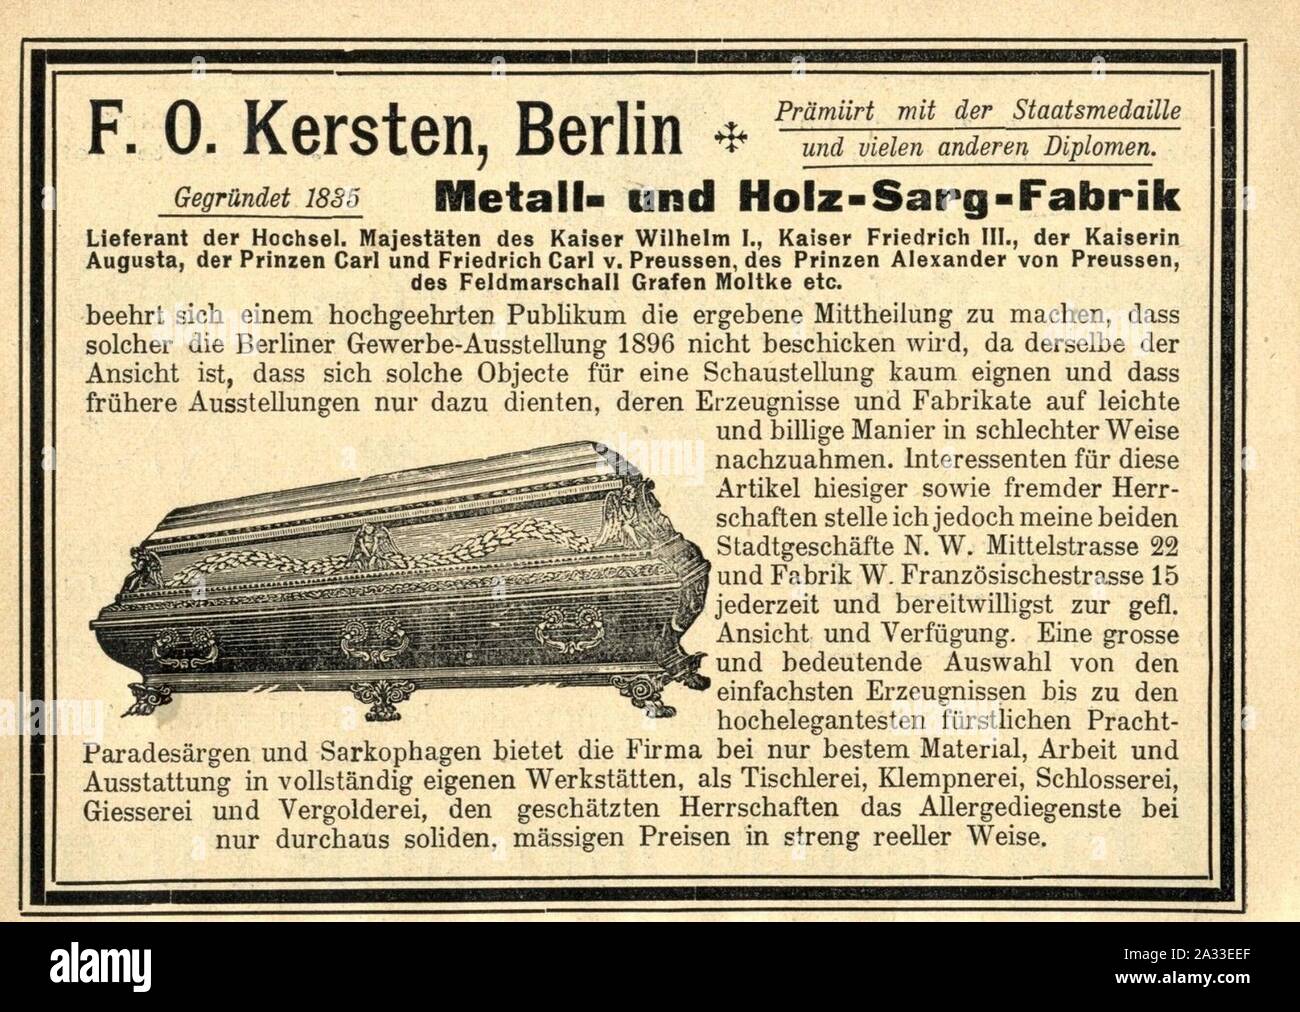 F. O. Kersten, Berlino - Metall- und Holz-Sarg-Fabrik, 1896. Foto Stock